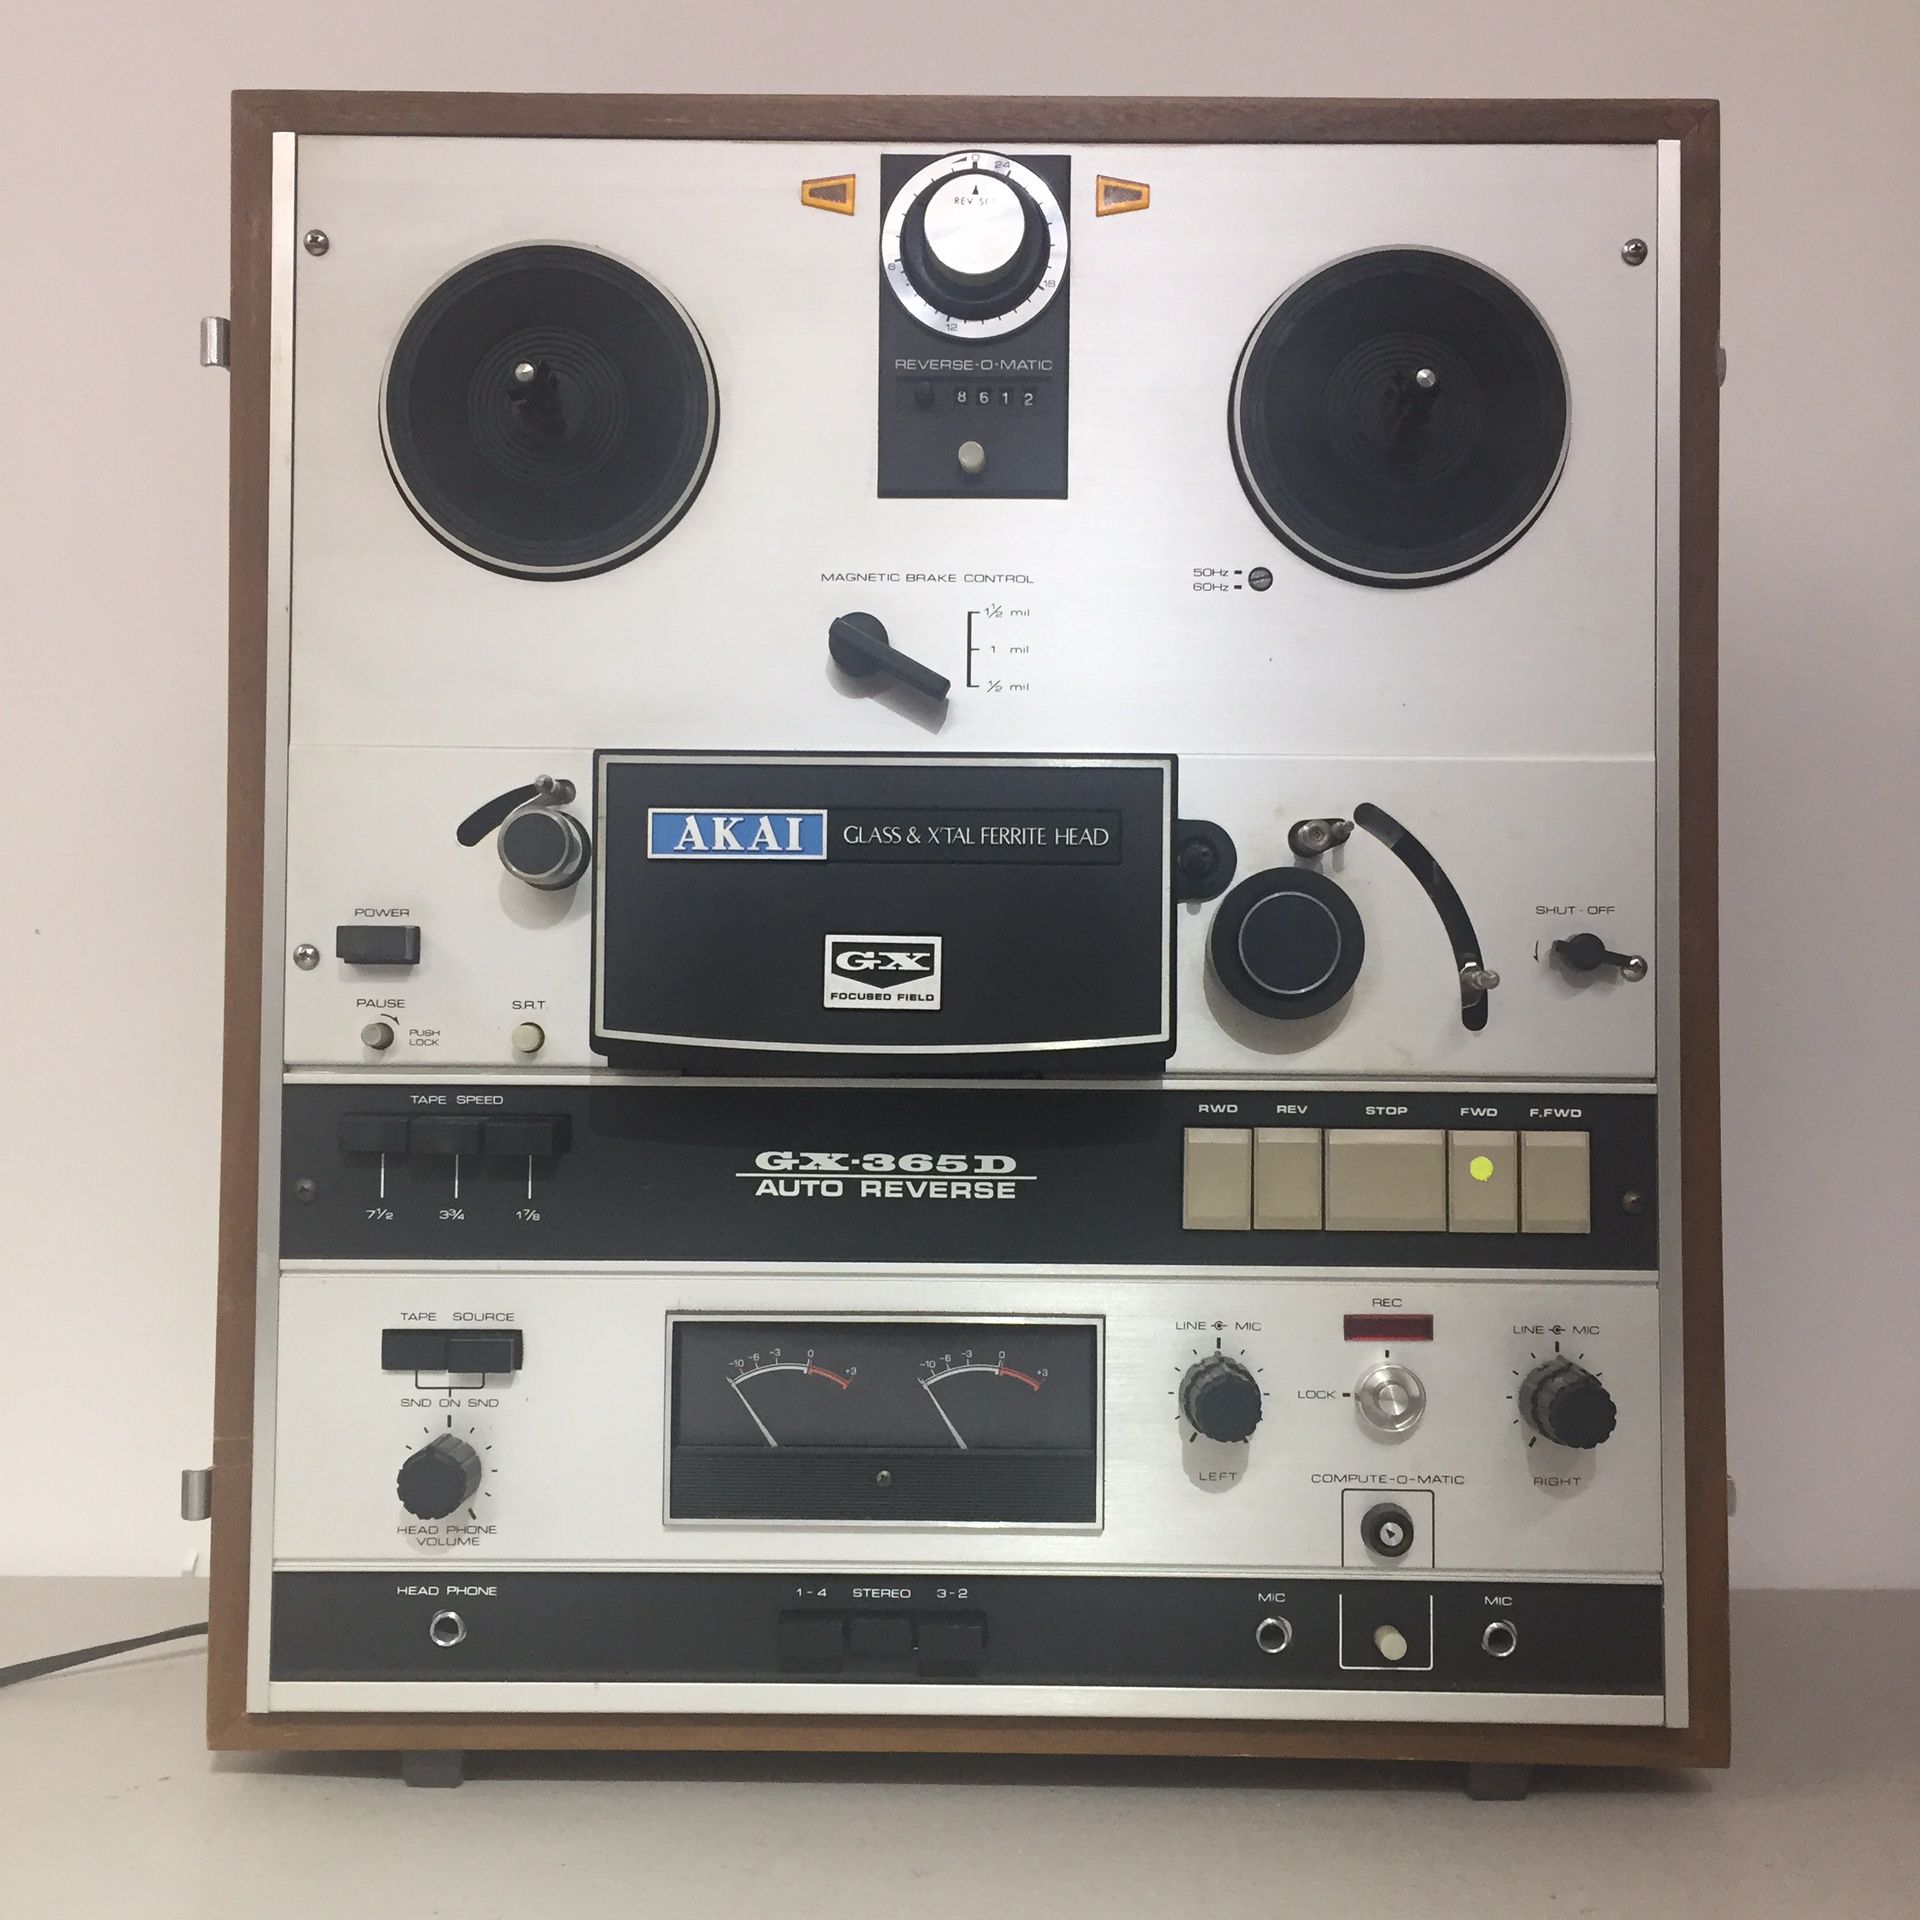 Akai GX-365D reel to reel vintage Japanese hifi stereo